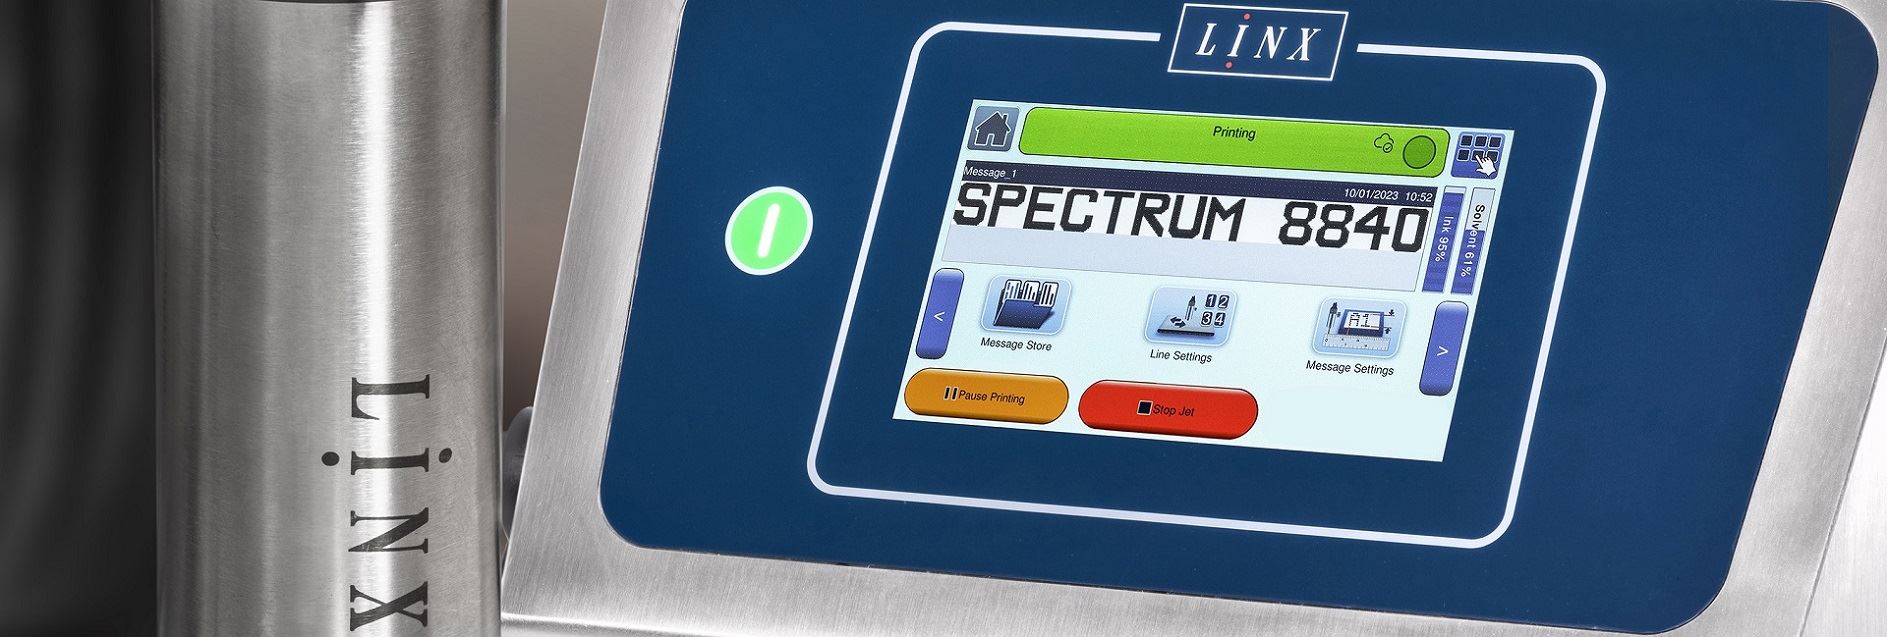 Linx 8840 Spectrum白色颜料墨喷码机震撼上市